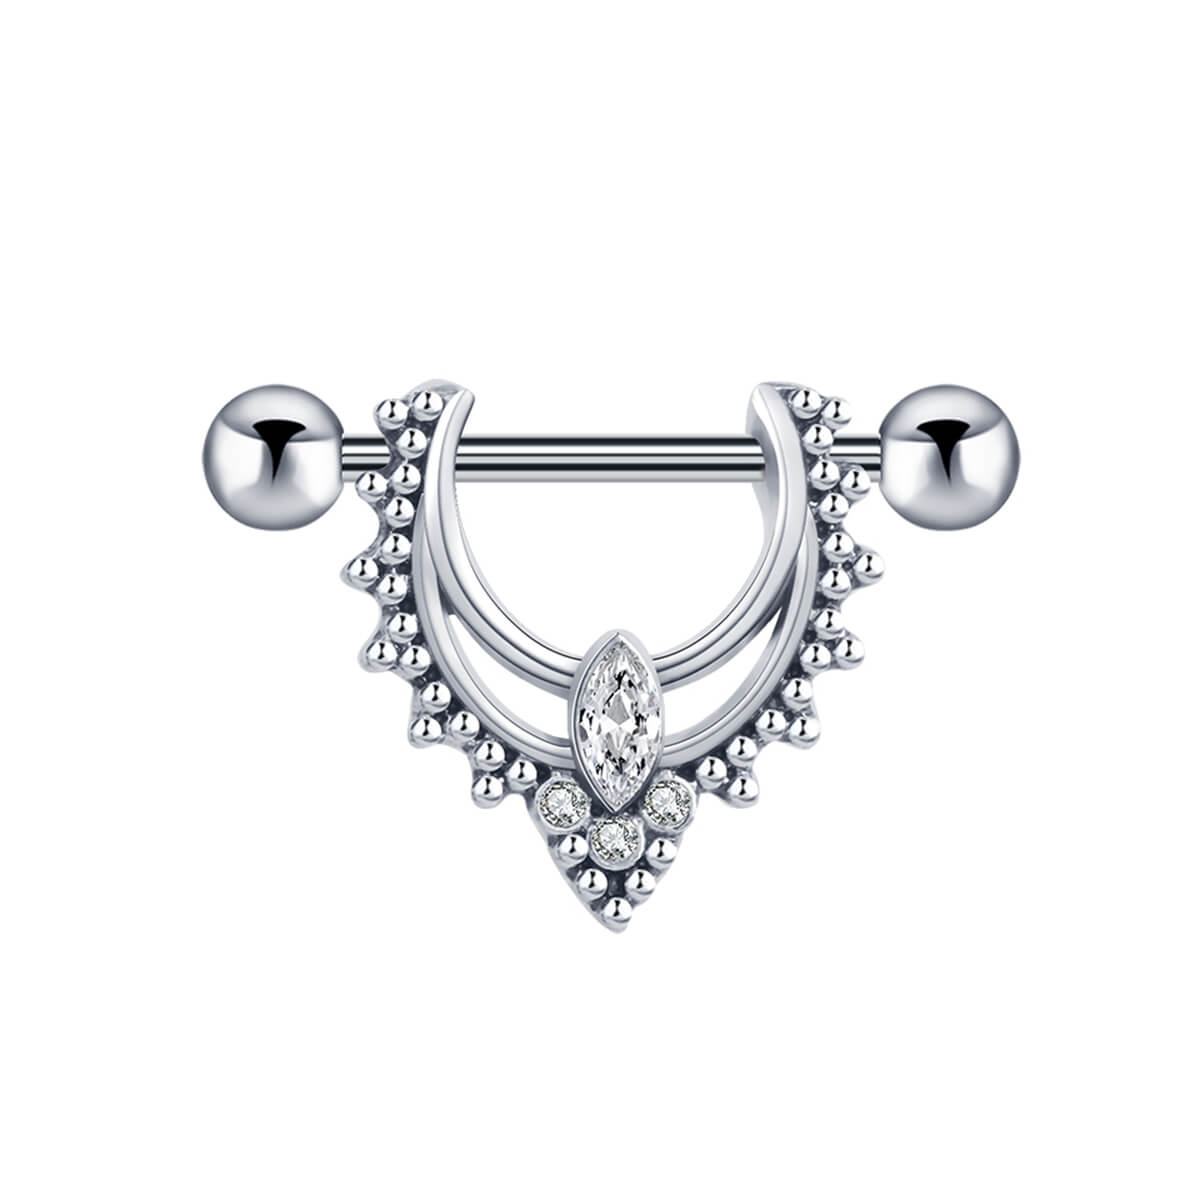 Decorative nipple bracelet with pendant (steel 316L)